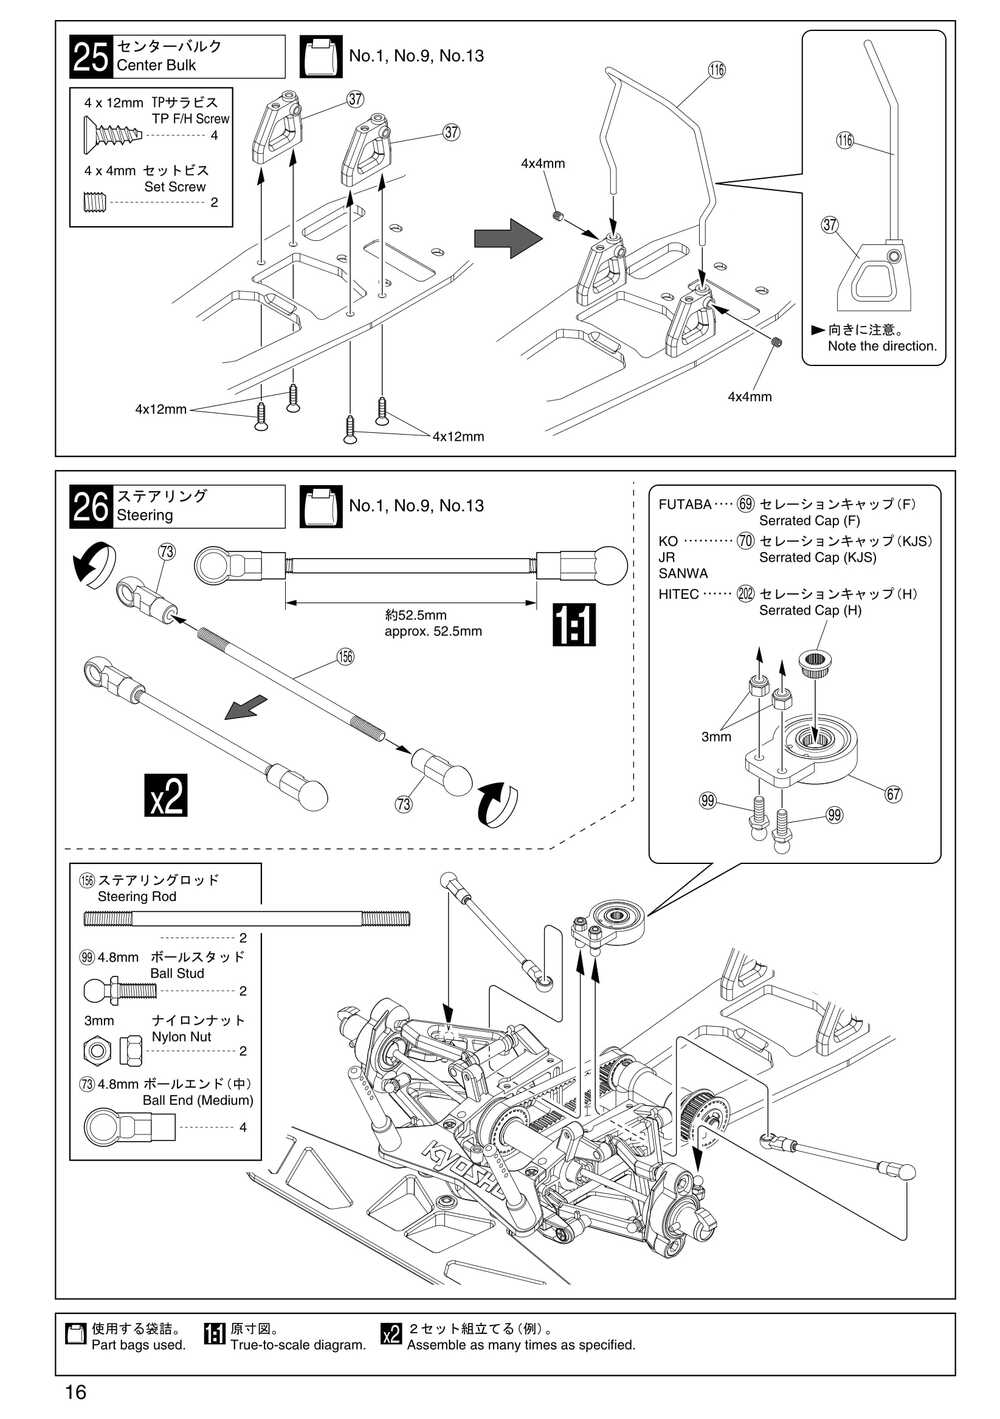 Kyosho - 31041 - Fantom Sports - Manual - Page 16